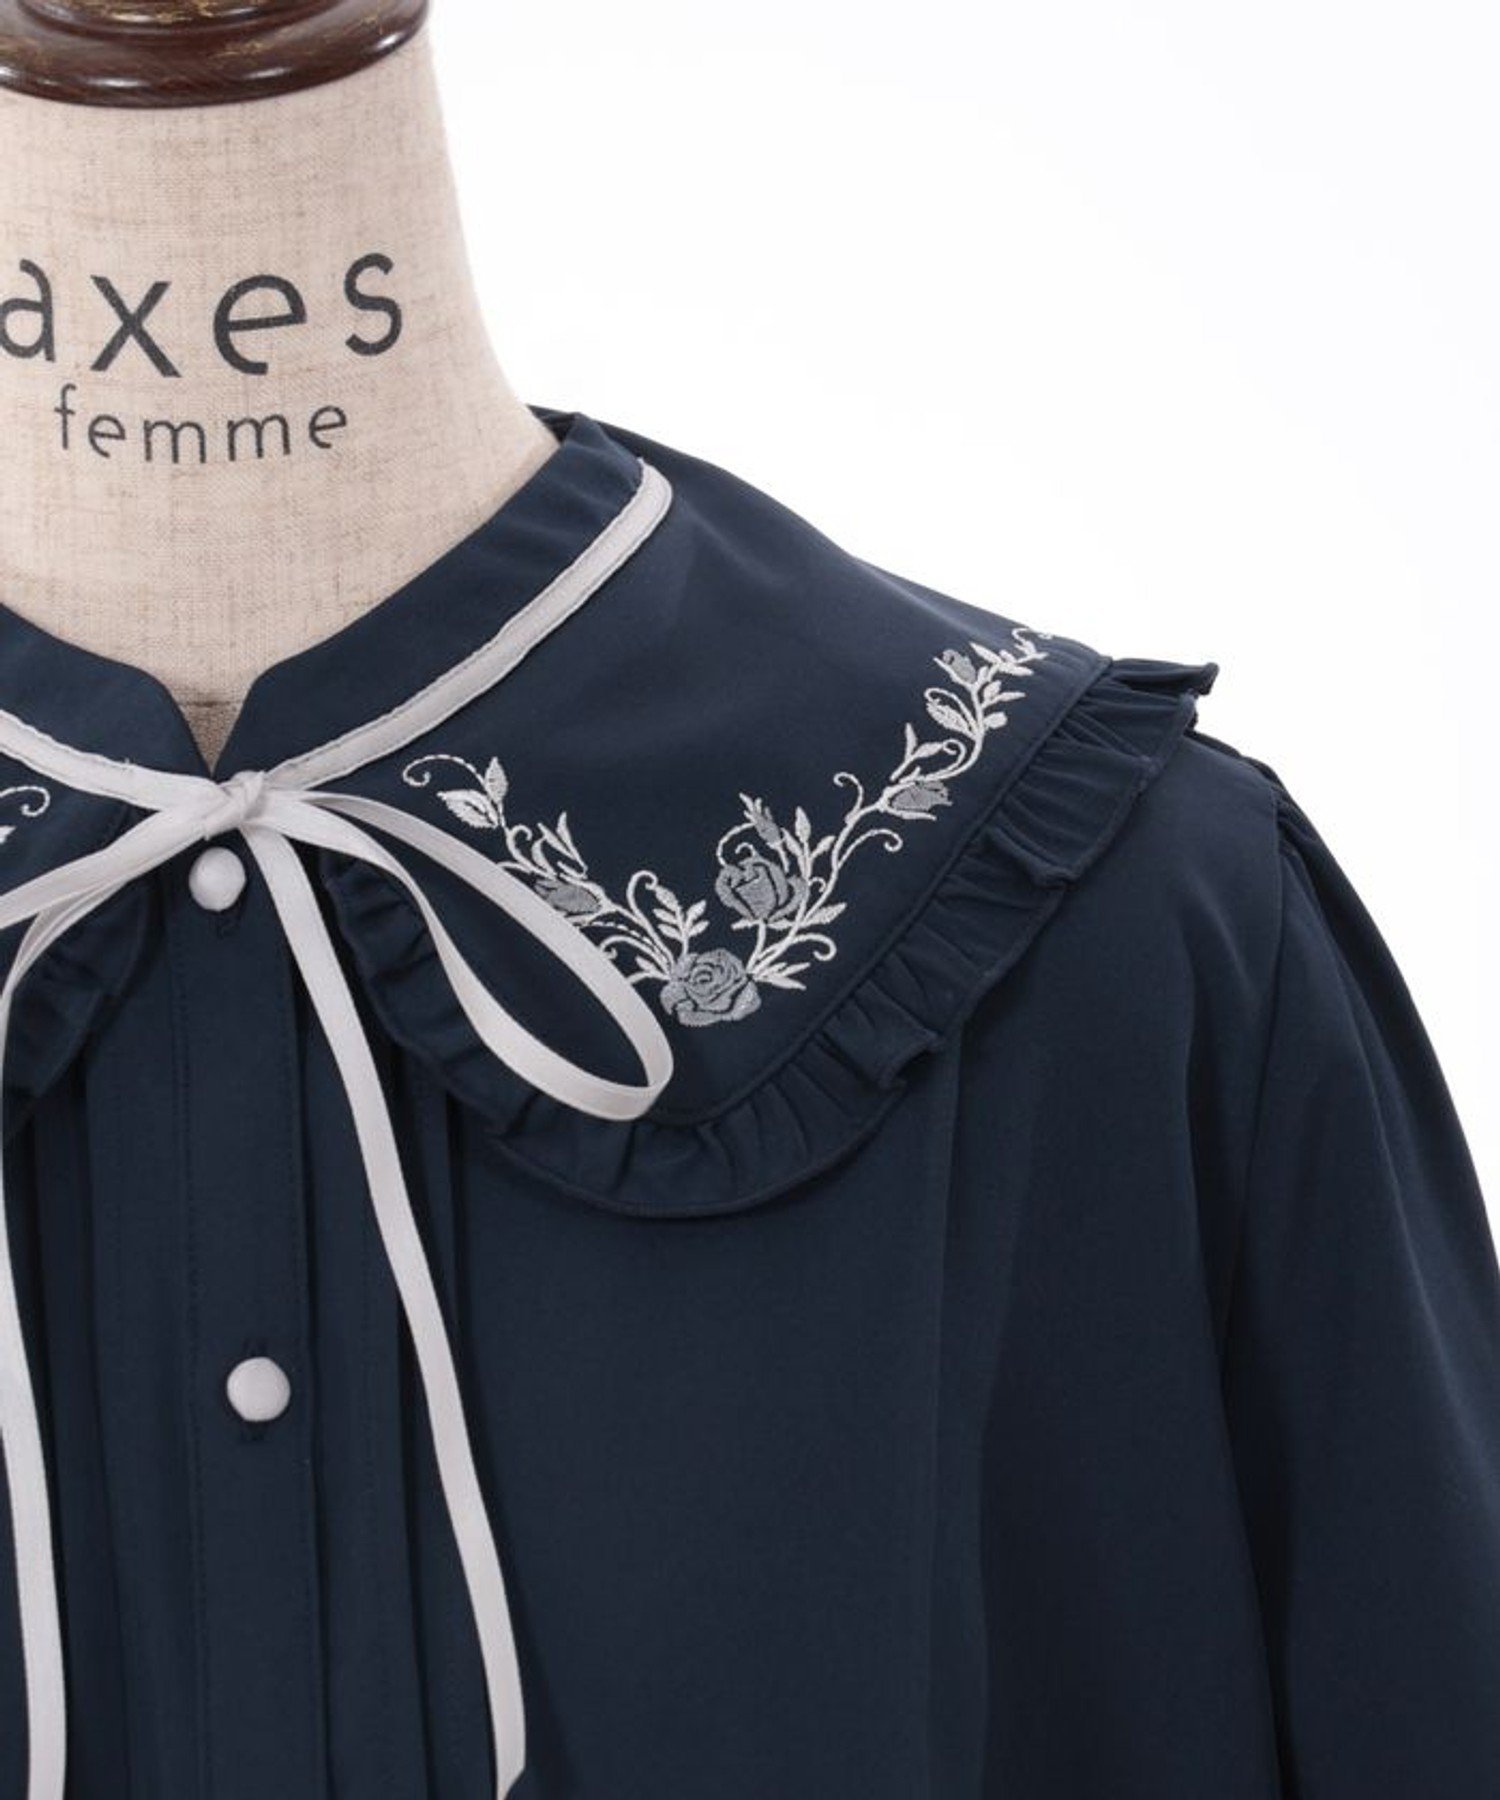 axes femme｜ブーケ刺繍フリル襟ブラウス | Rakuten Fashion(楽天